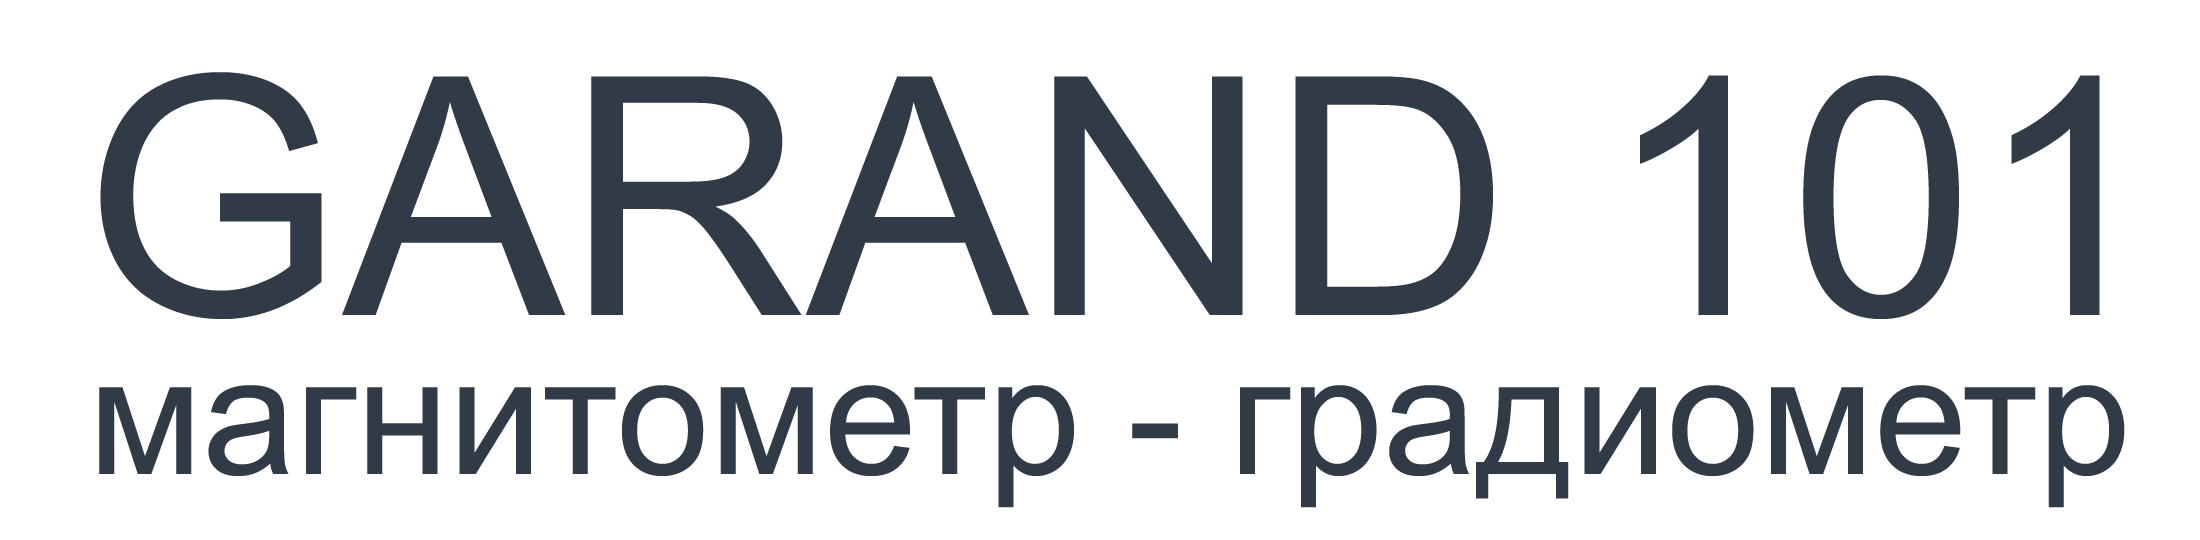 Логотип магнитометра Garand 101